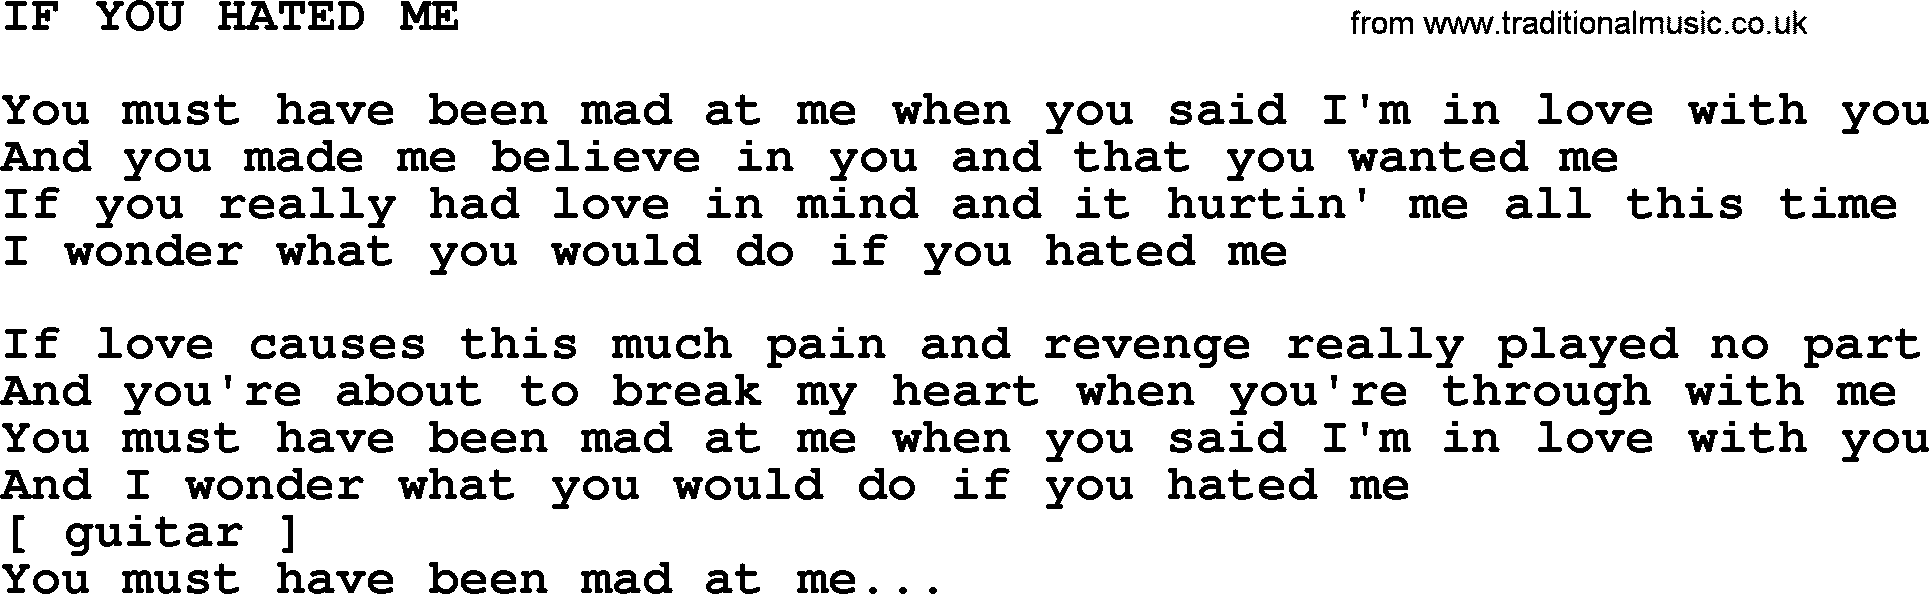 Merle Haggard song: If You Hated Me, lyrics.